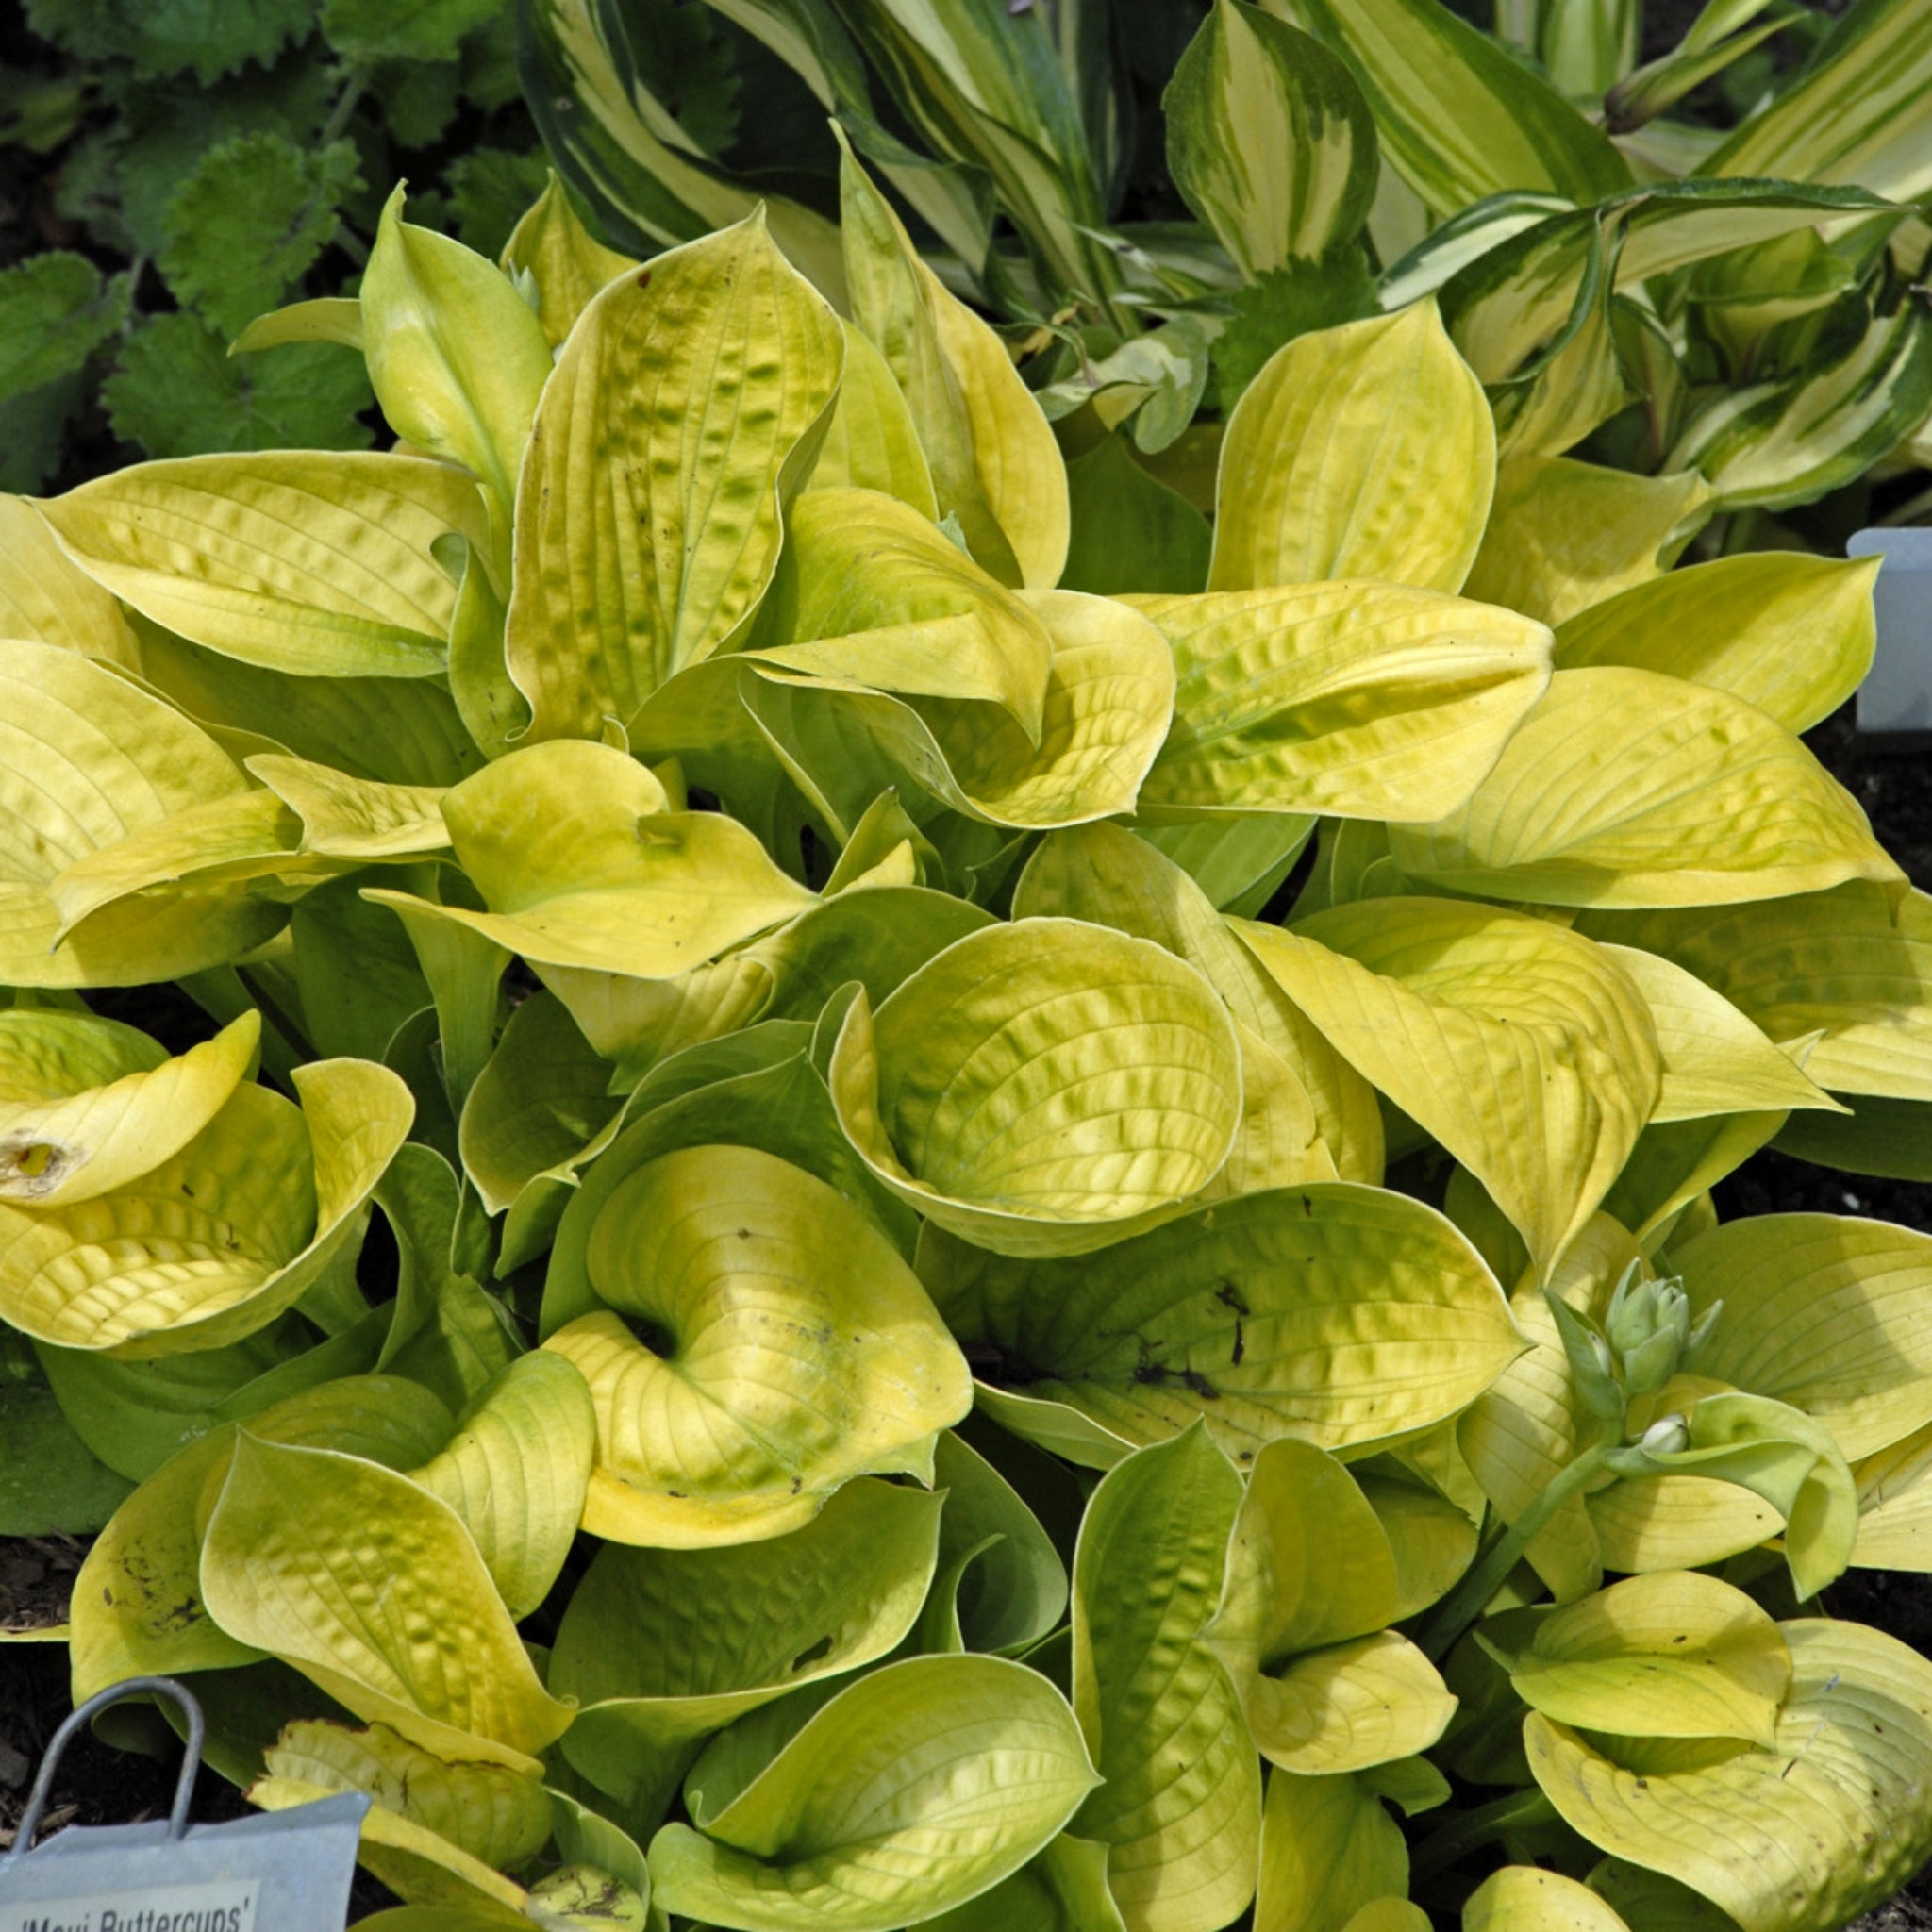 NH Buttercups – Shade Tolerant Perennial Hostas Hosta - Maui Hosta Plant Sun